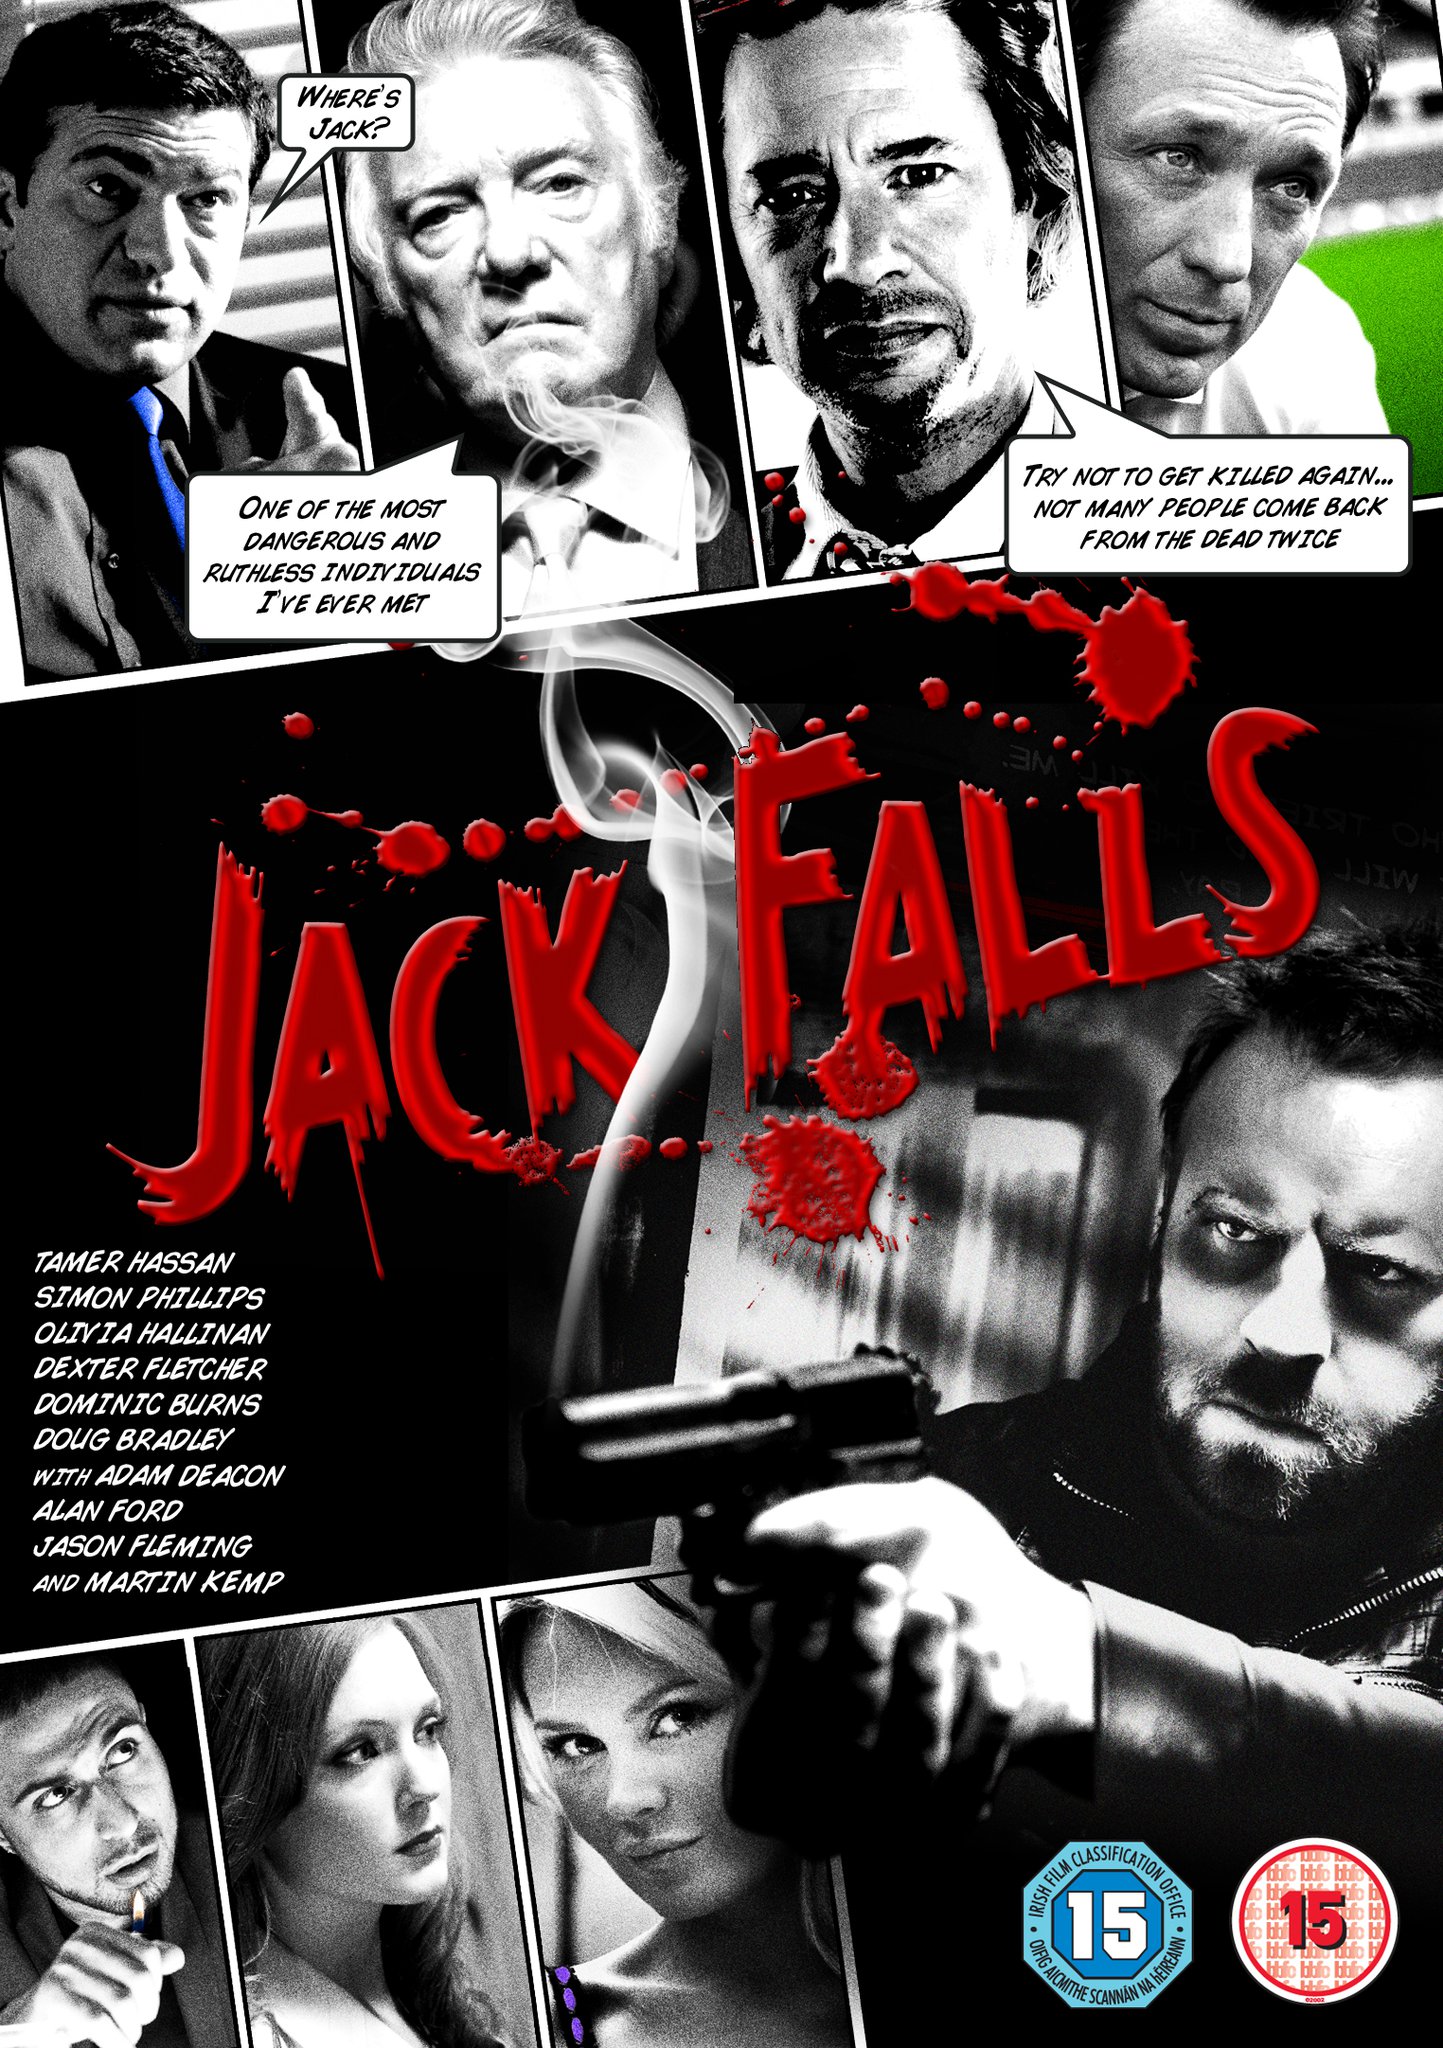 Jack Falls movie